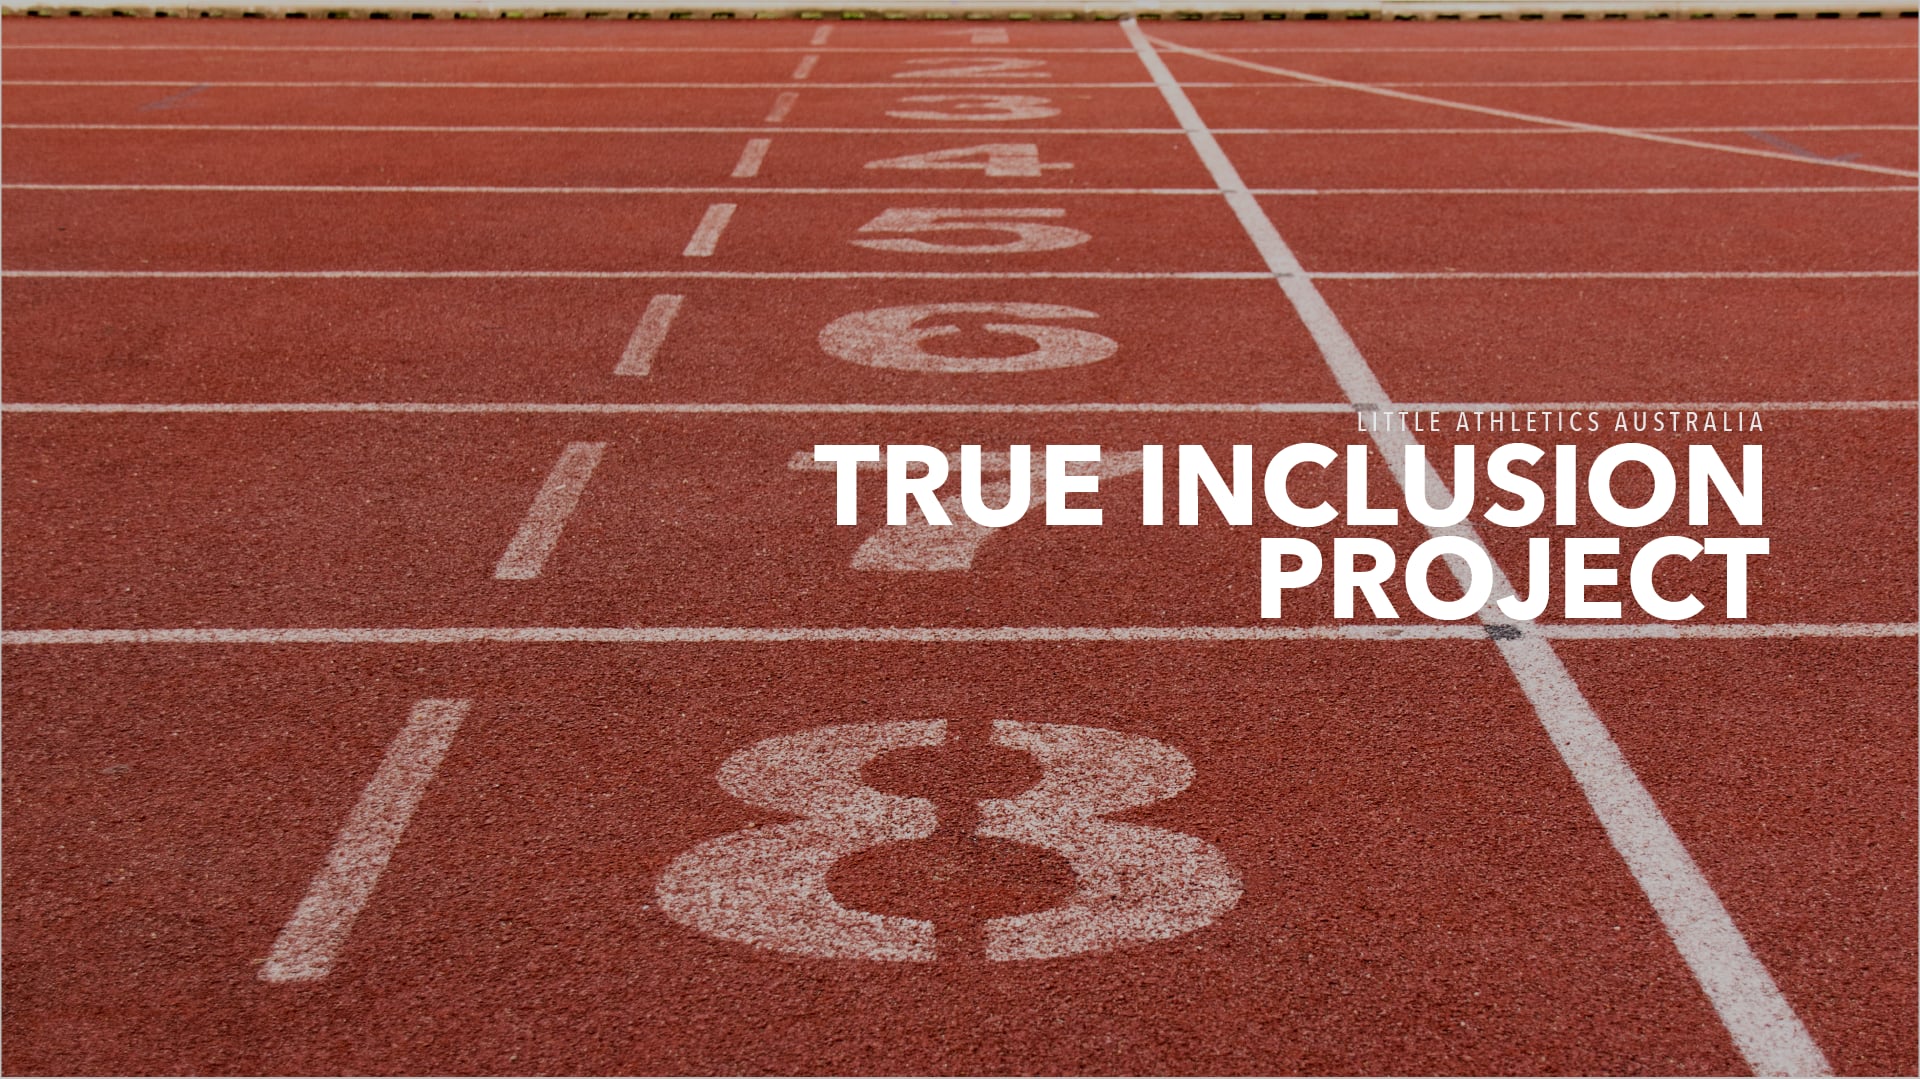 Little Athletics Australia - The True Inclusion Project - Social Teaser